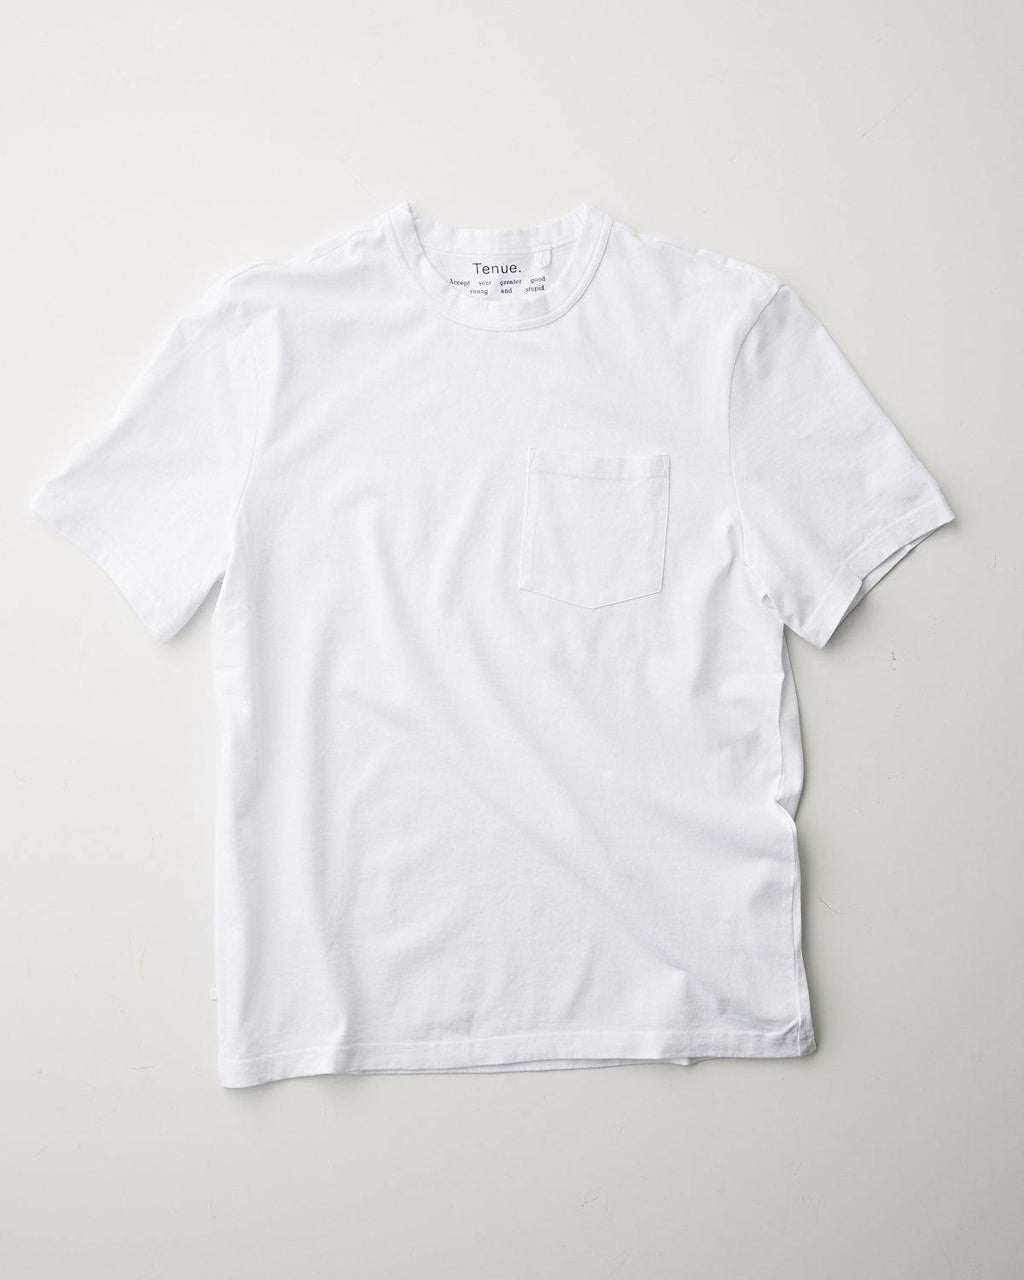 Tenue. John Pocket Tee White T-shirt S/S Men